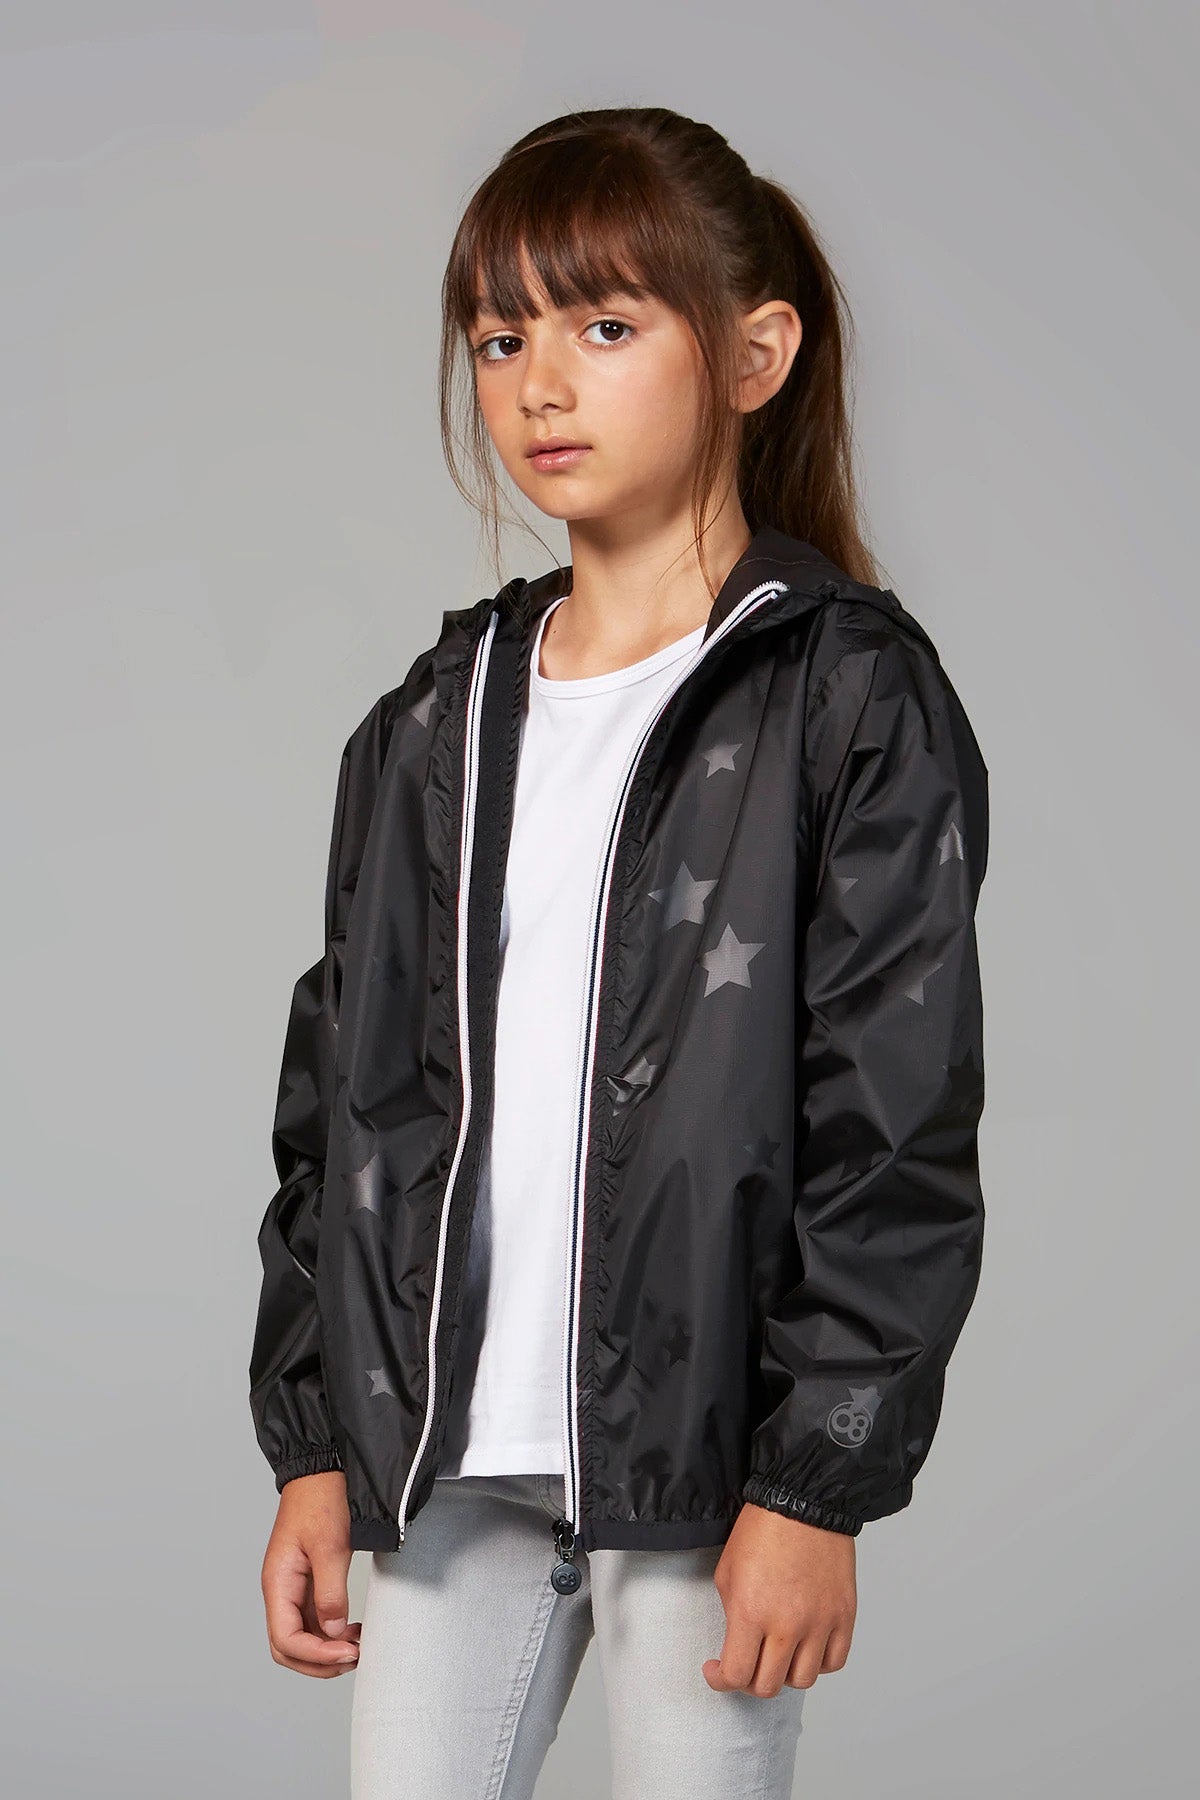 Kids black gloss stars packable rain jacket and windbreaker - O8Lifestyle